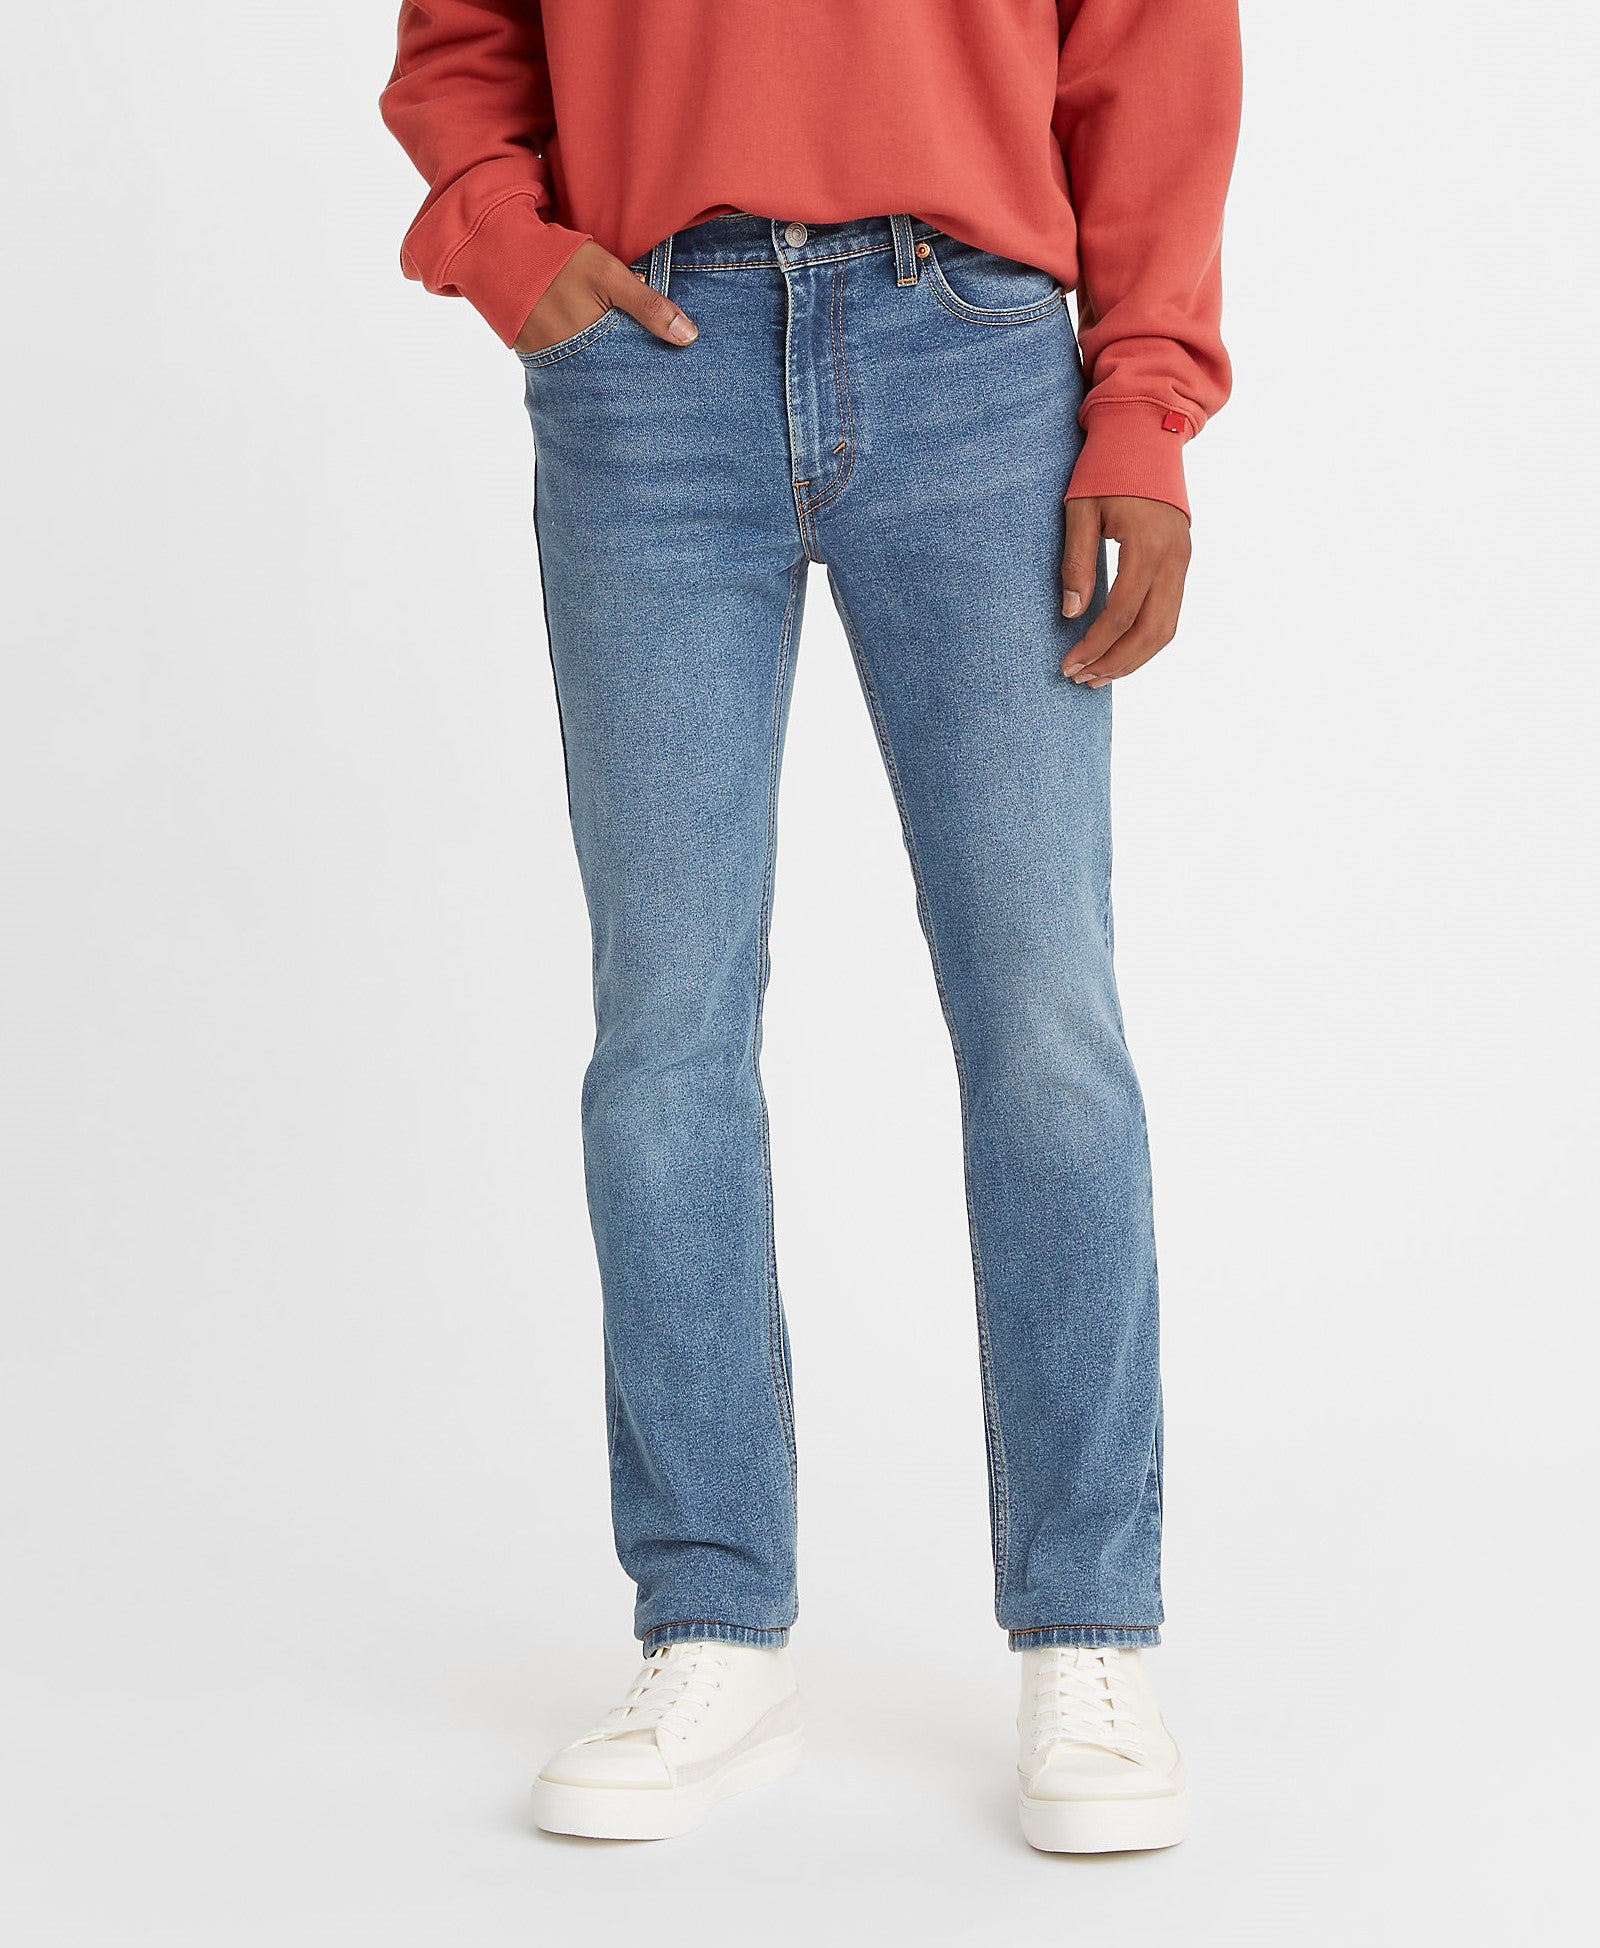 pantalones-jeans-levis-511-slim-fresh-p-caballero